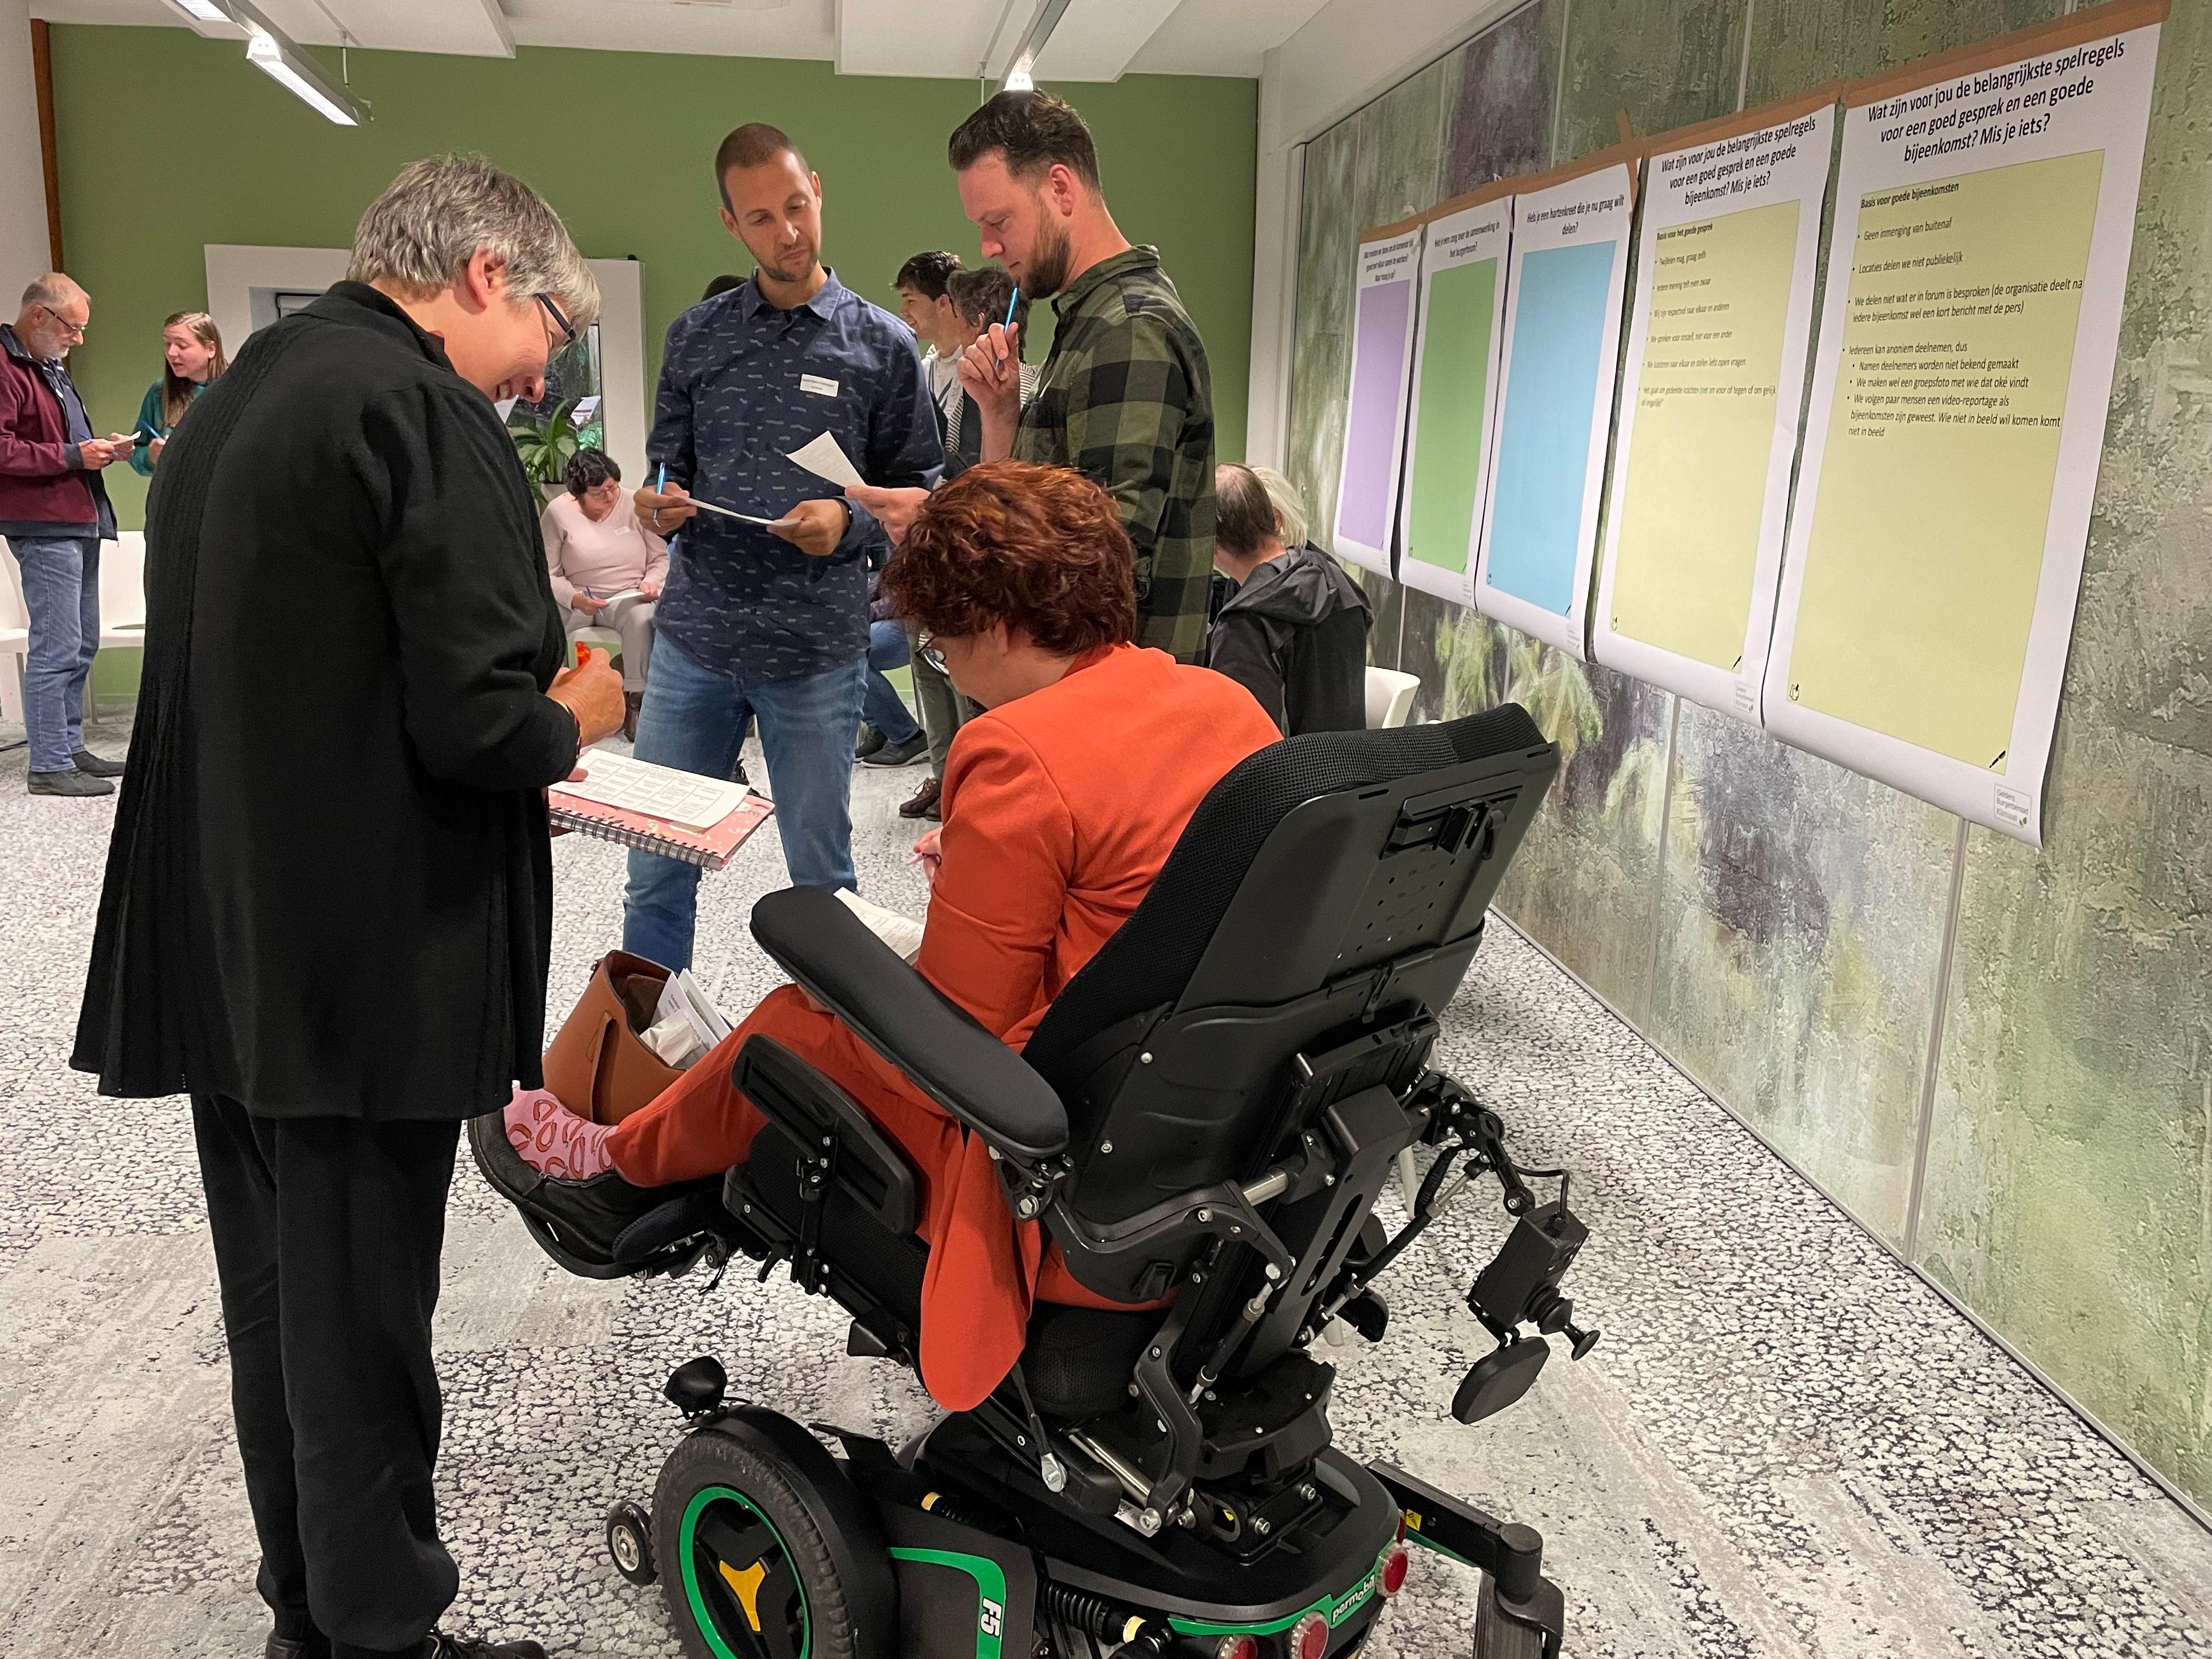 Deelnemer burgerberaad in aangepaste rolstoel in gesprek met mededeelnemer 